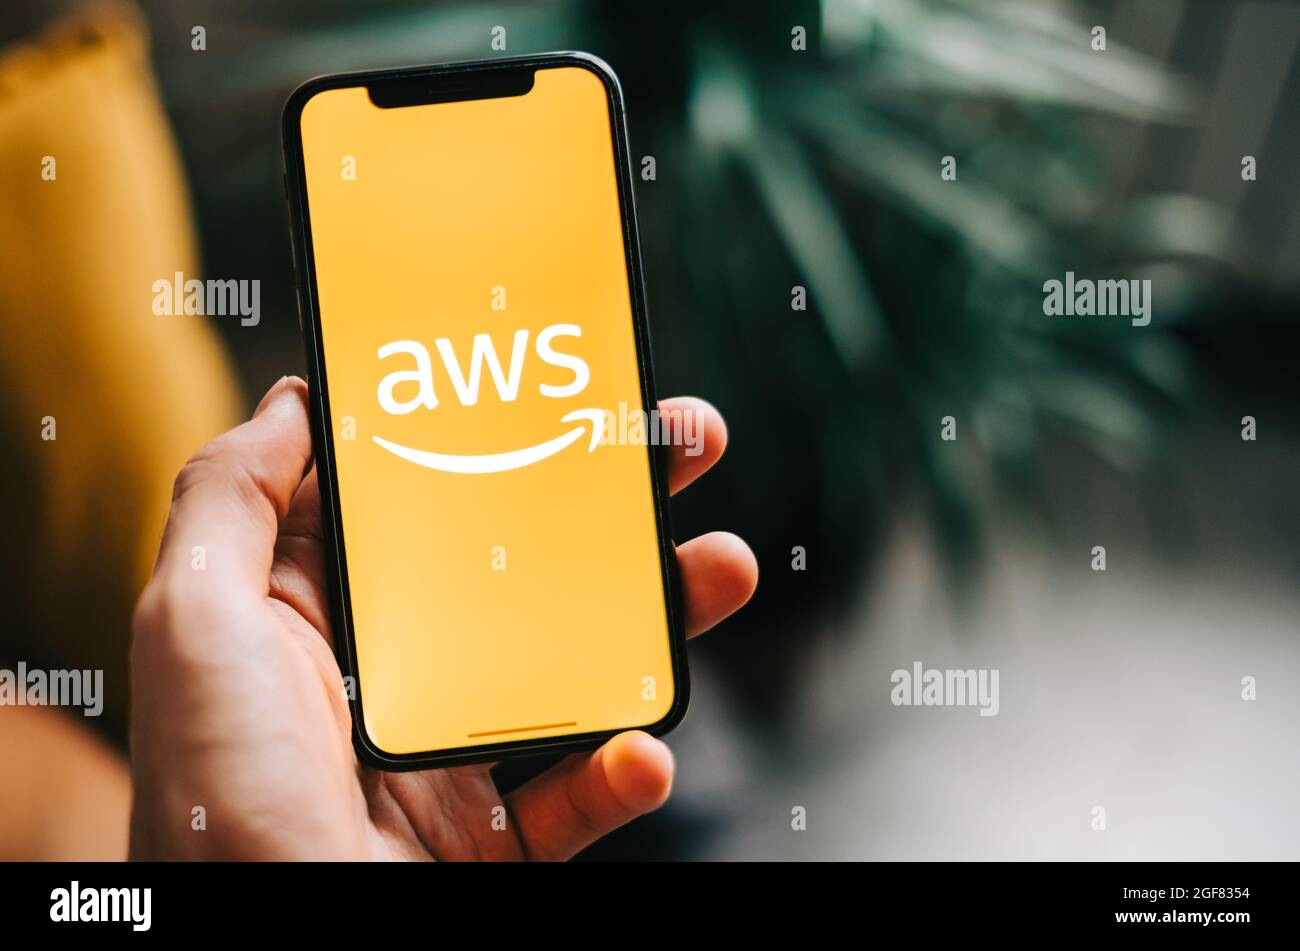 Amazon Web Services logo on the smartphone screen. Stock Photo